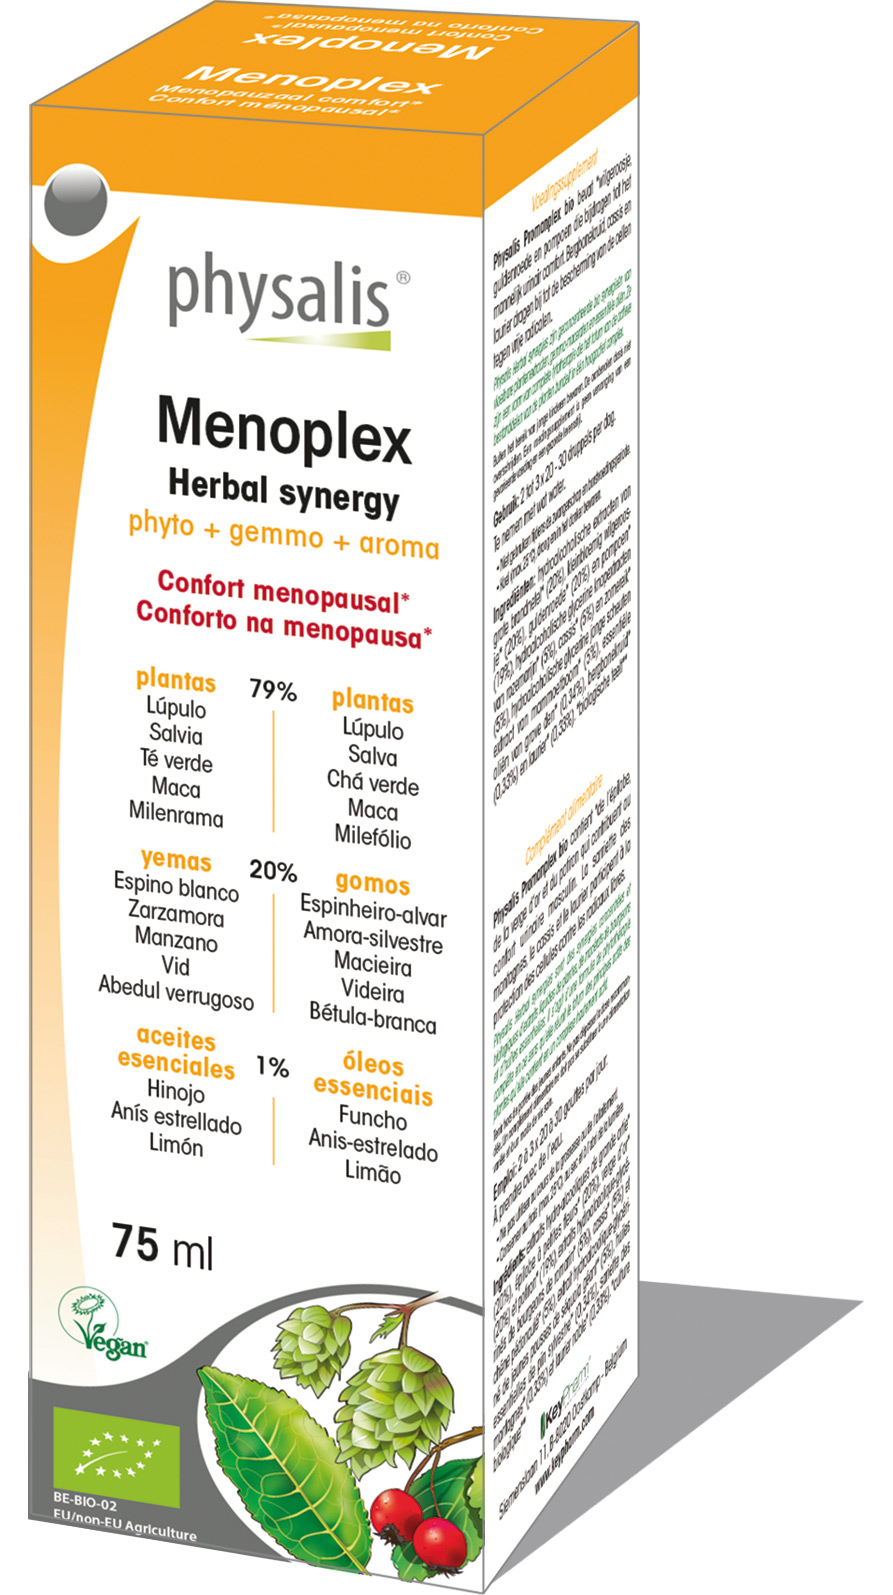 Menoplex - Herbal synergy